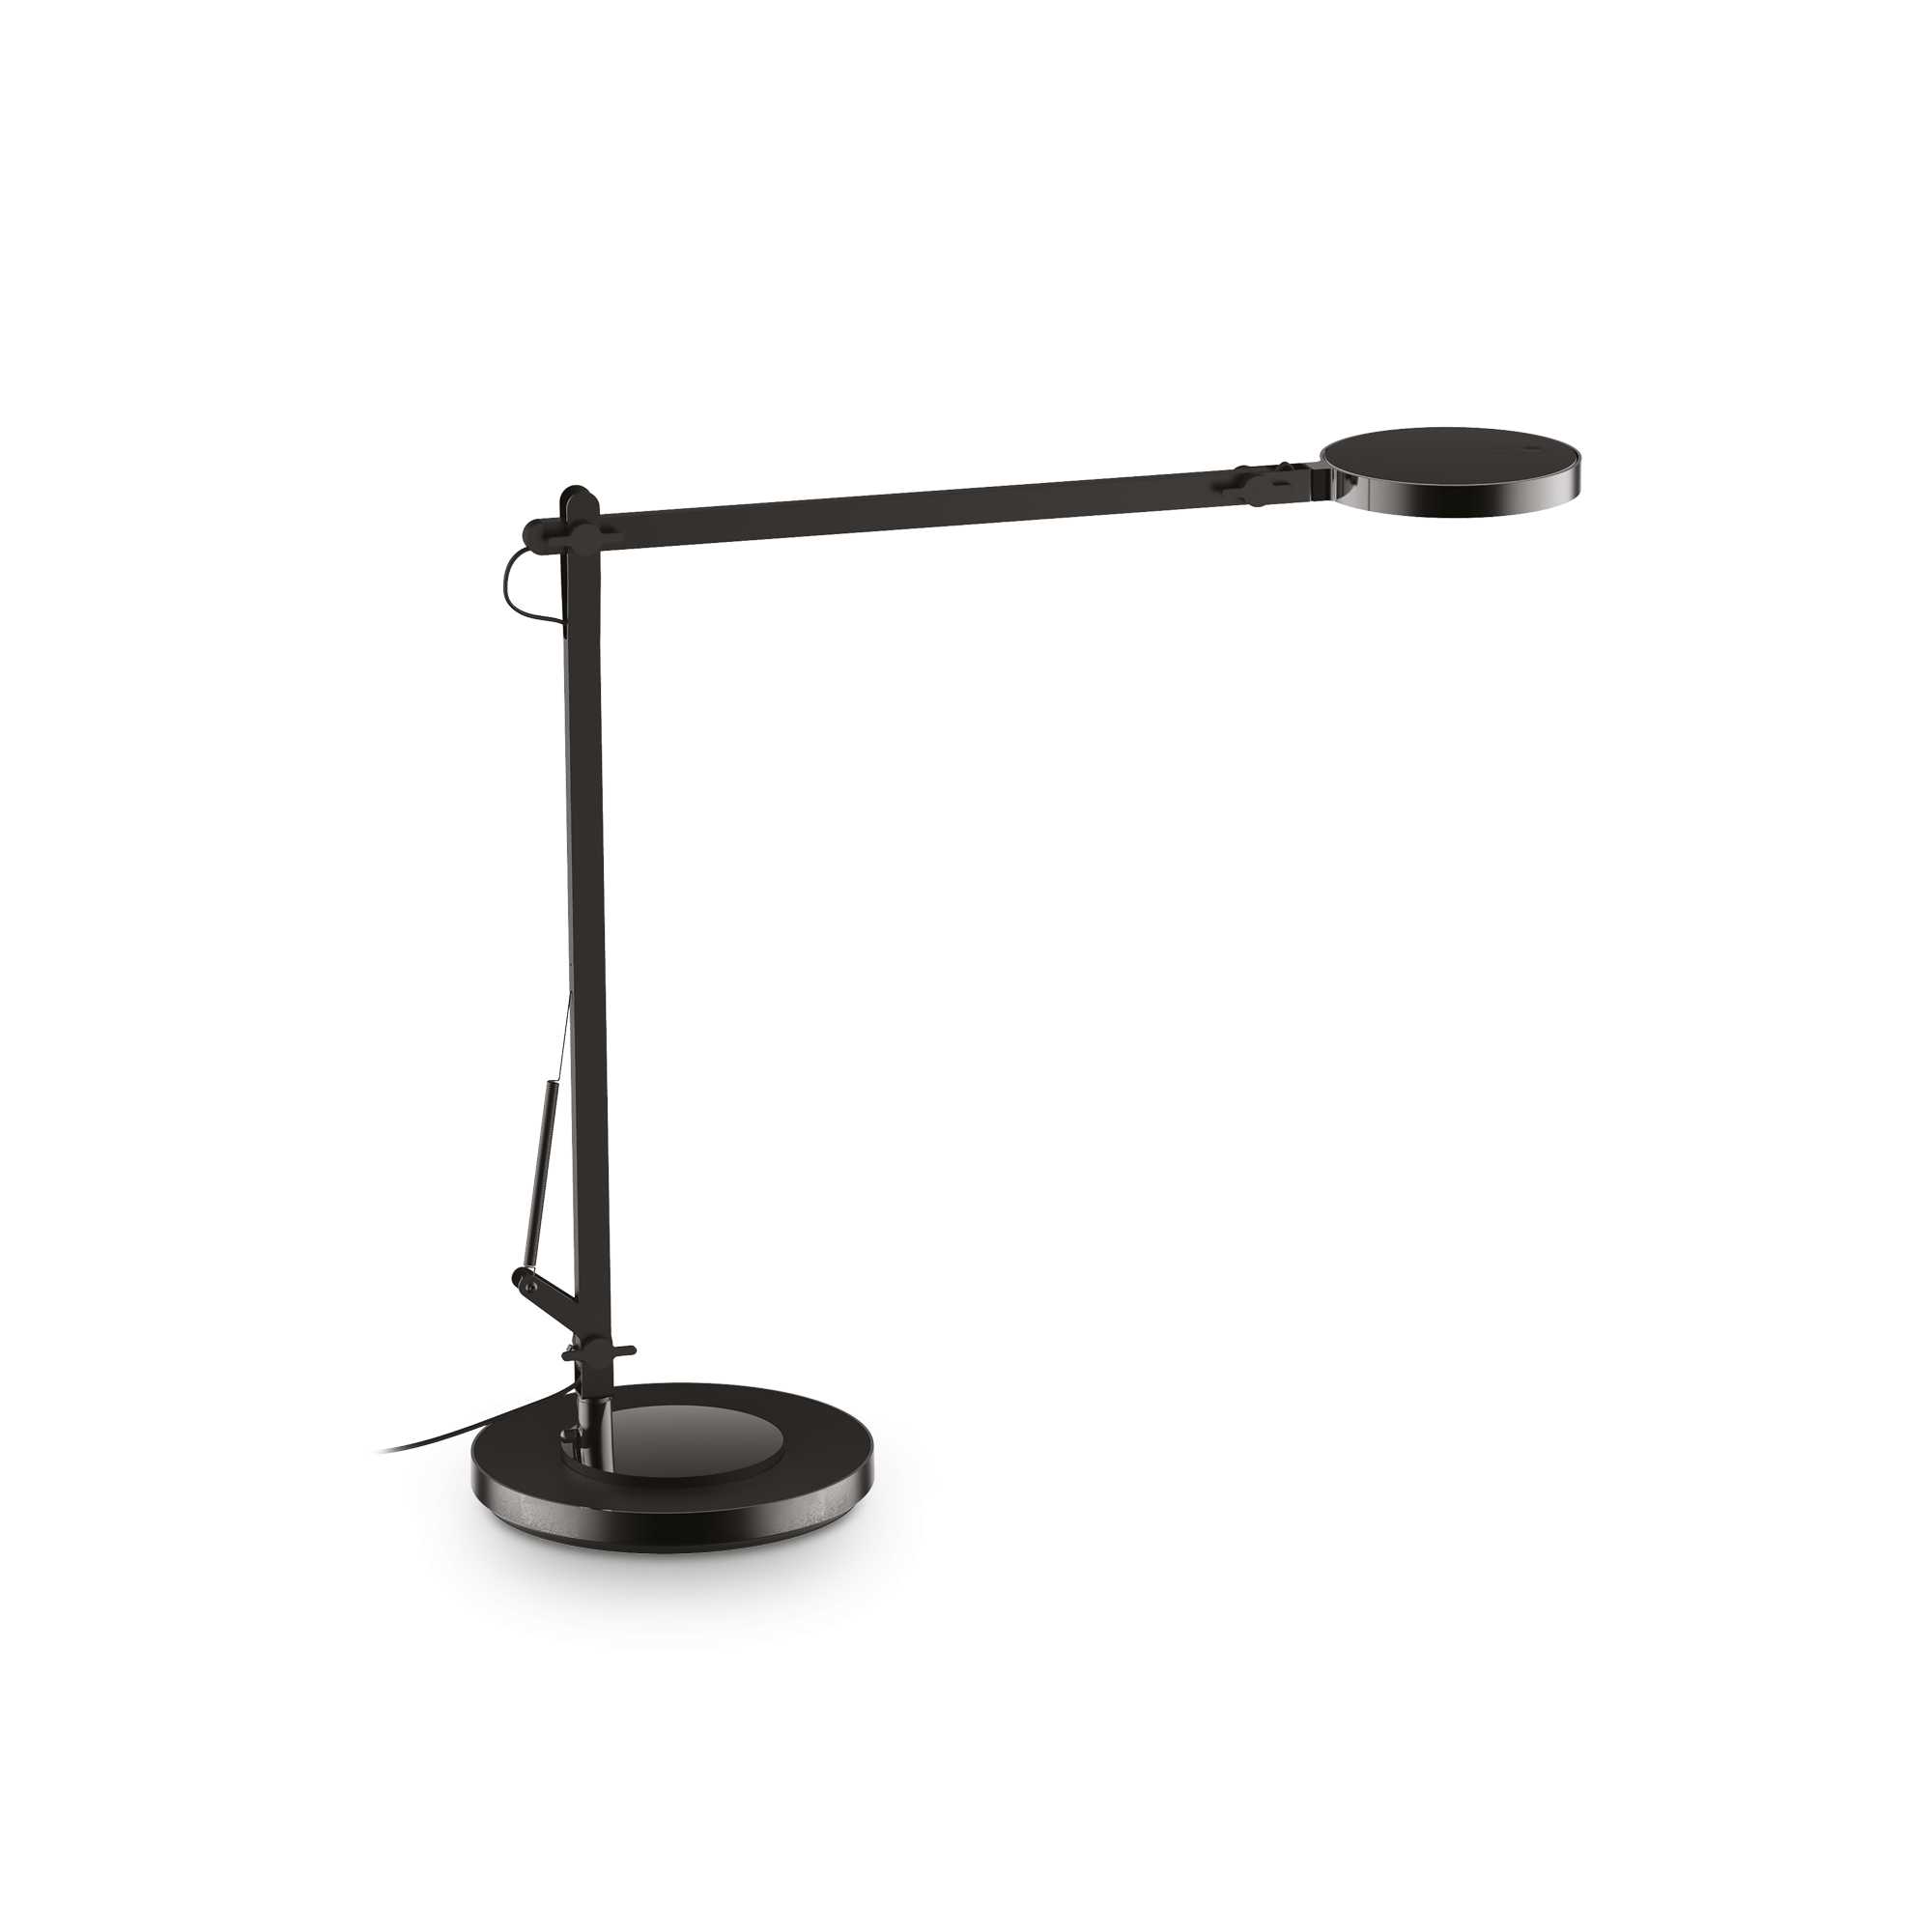 AD hotelska oprema Stolna lampa Futura tl- Crne boje slika proizvoda